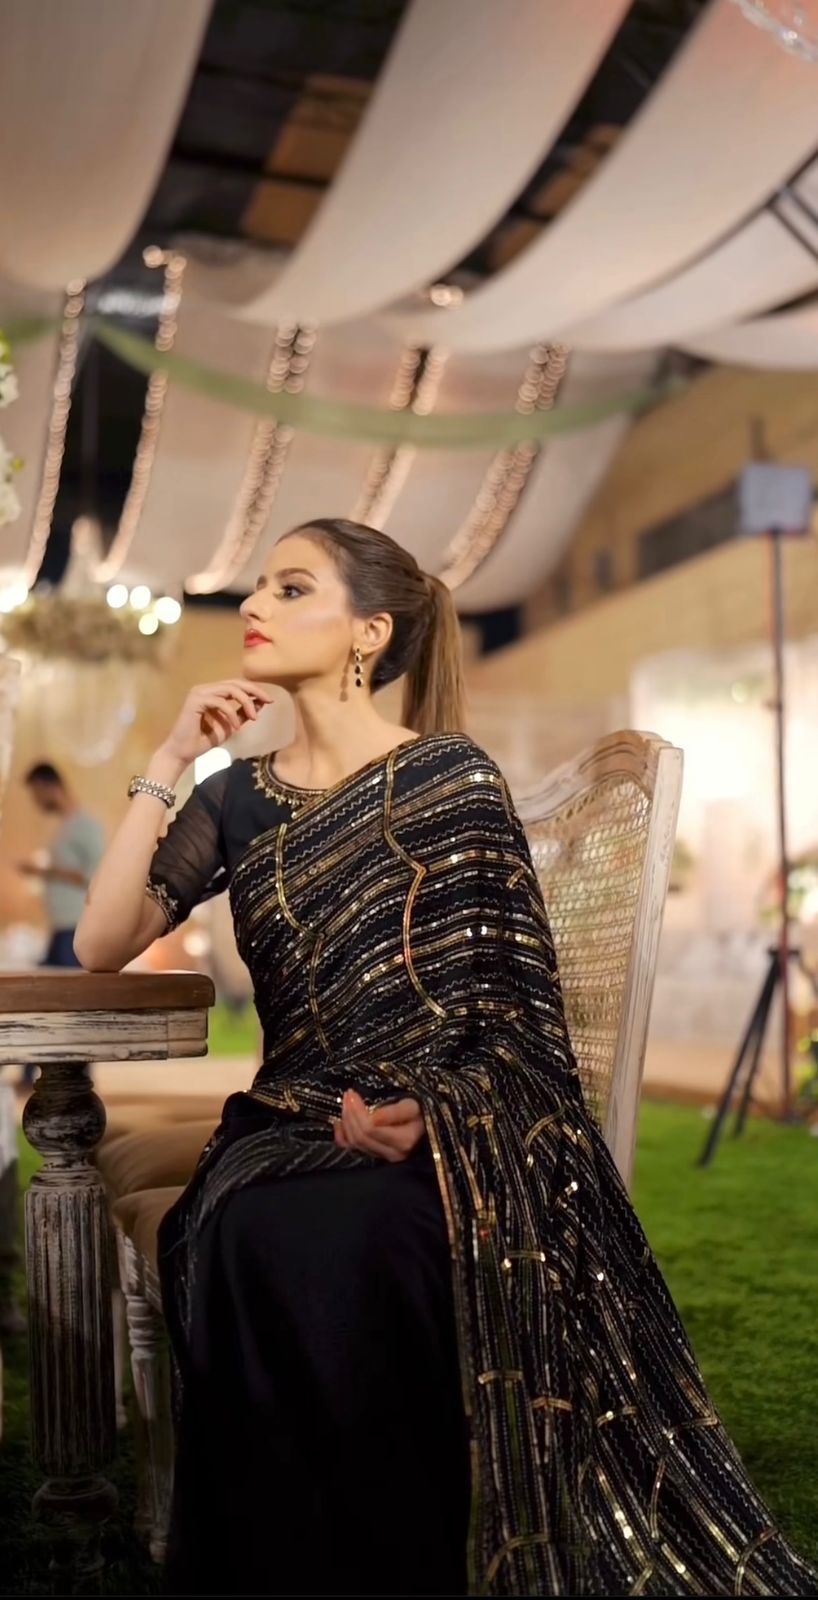 vivera international sitara gorgette decent look saree single